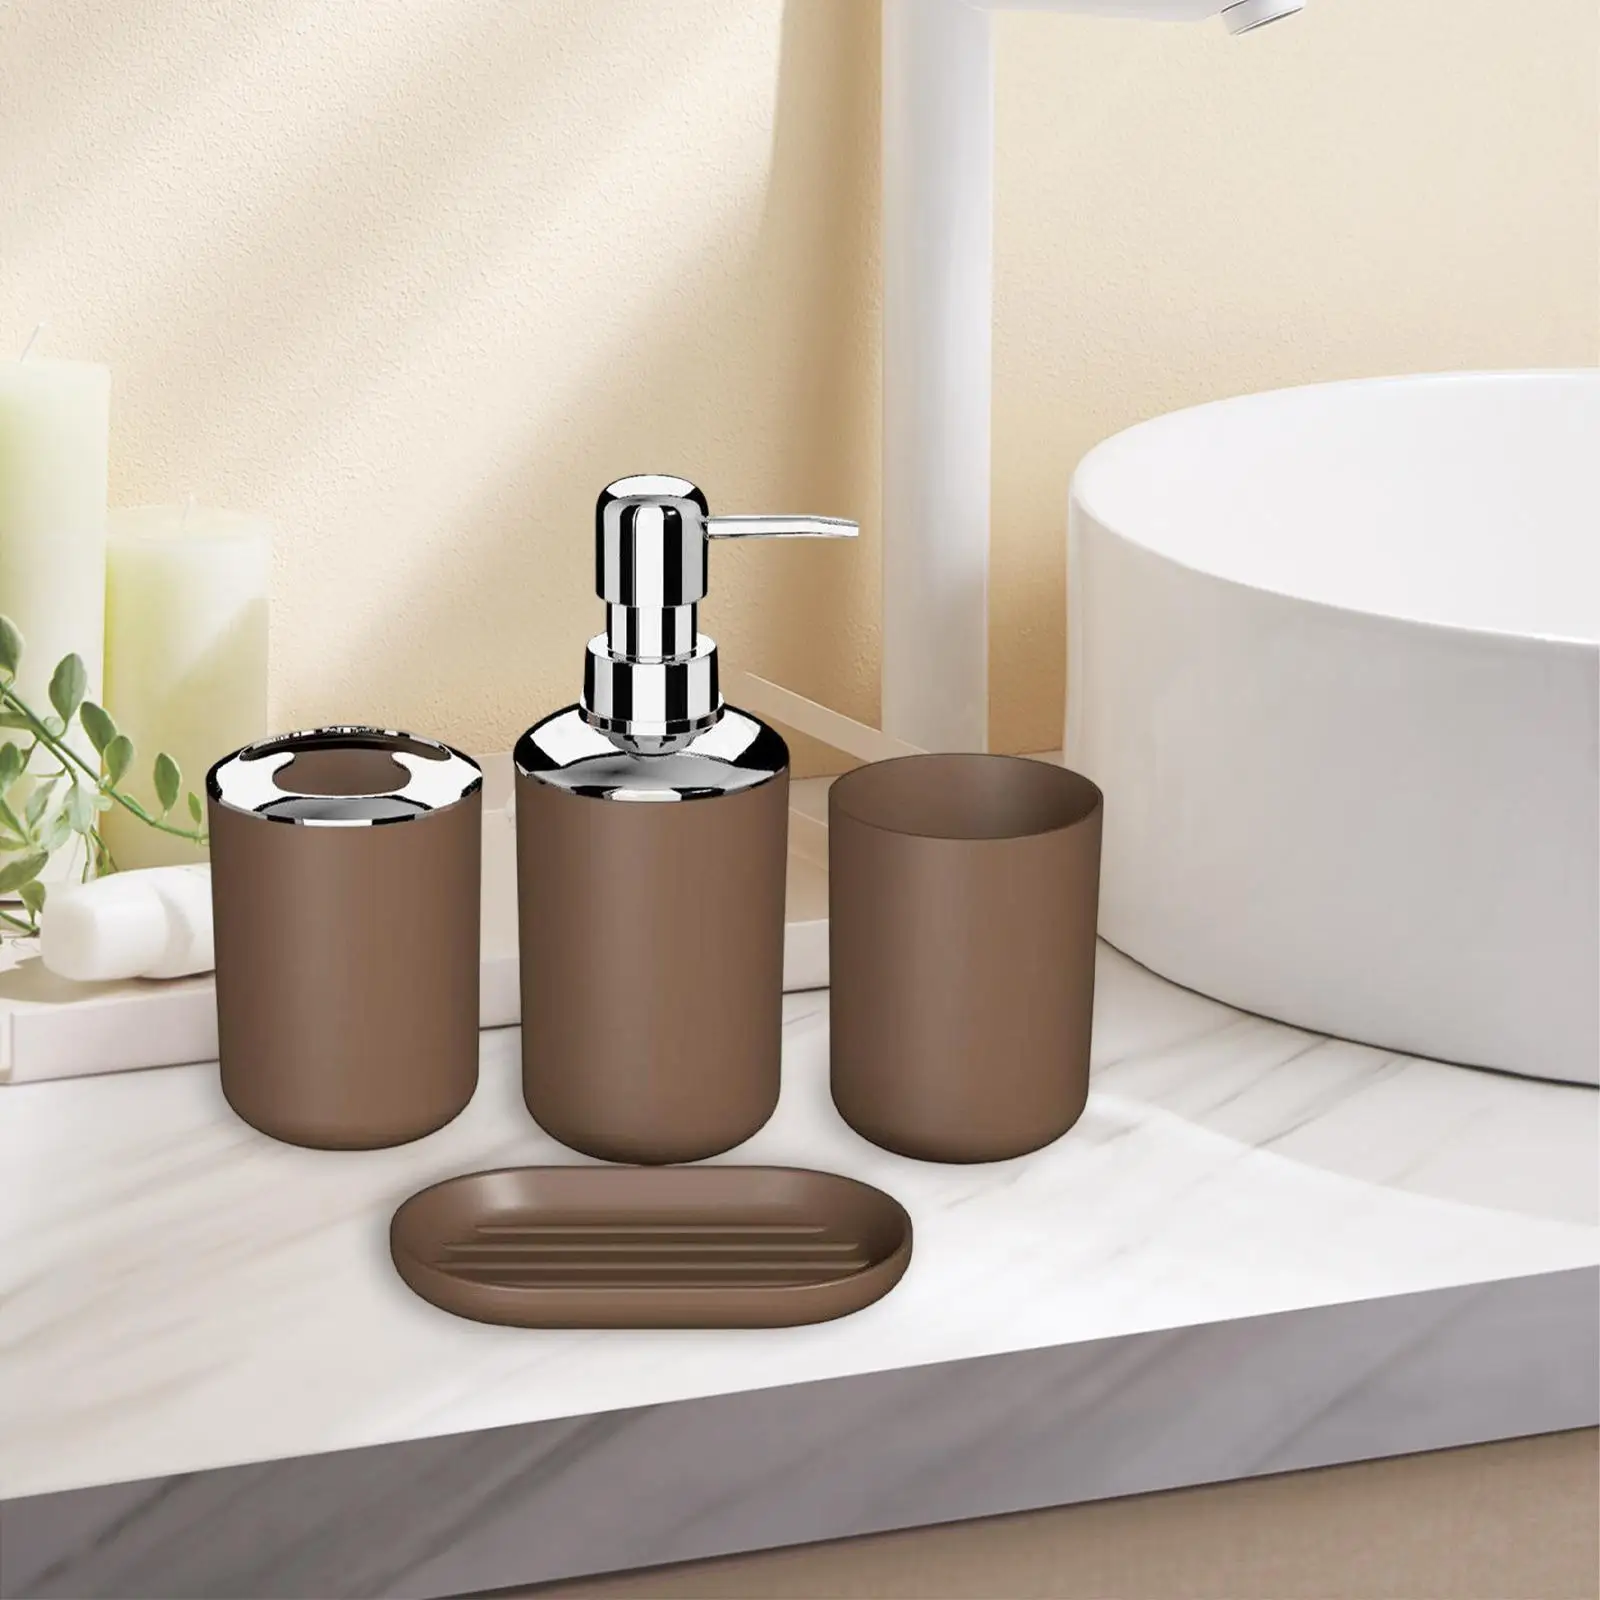 4Pcs Bathroom Accessories Set & Soap Dish Countertop Decor Neat & Tumbler Vanity Organizer for Apartment Homes Hotels